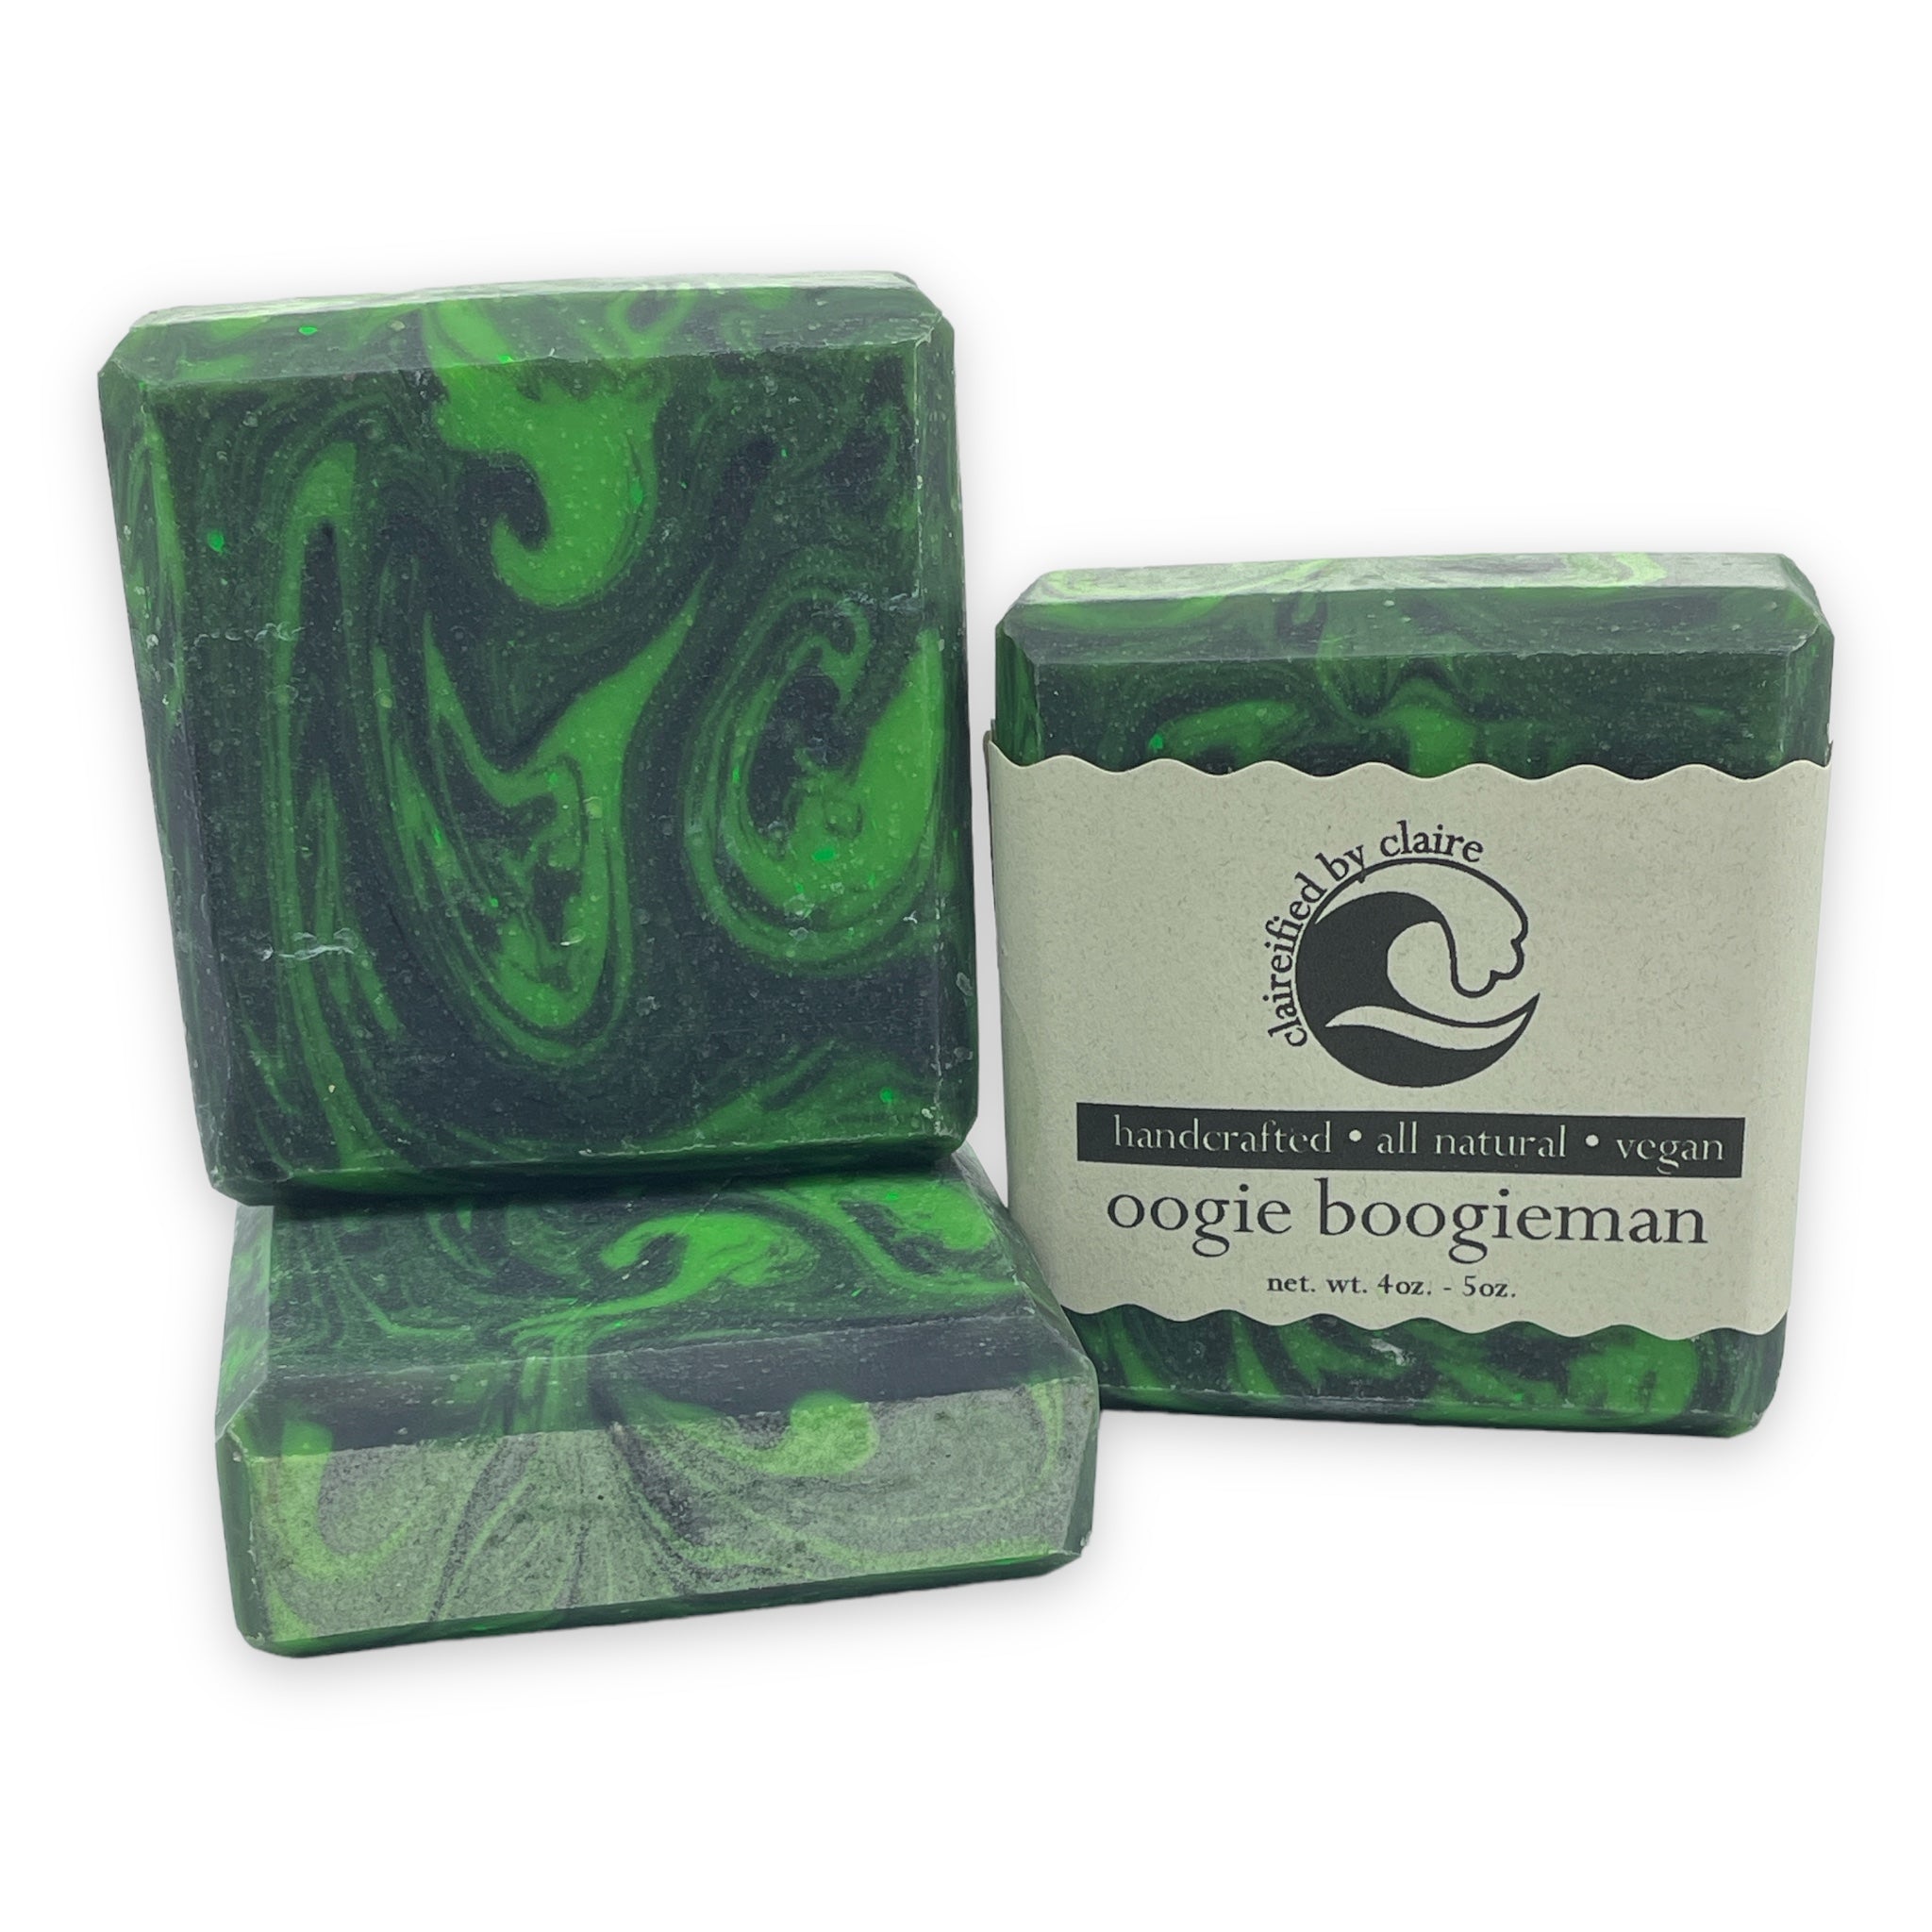 Oogie Boogieman handmade soap inspired by the Nightmare Before XMas character Oogie Boogie - 0